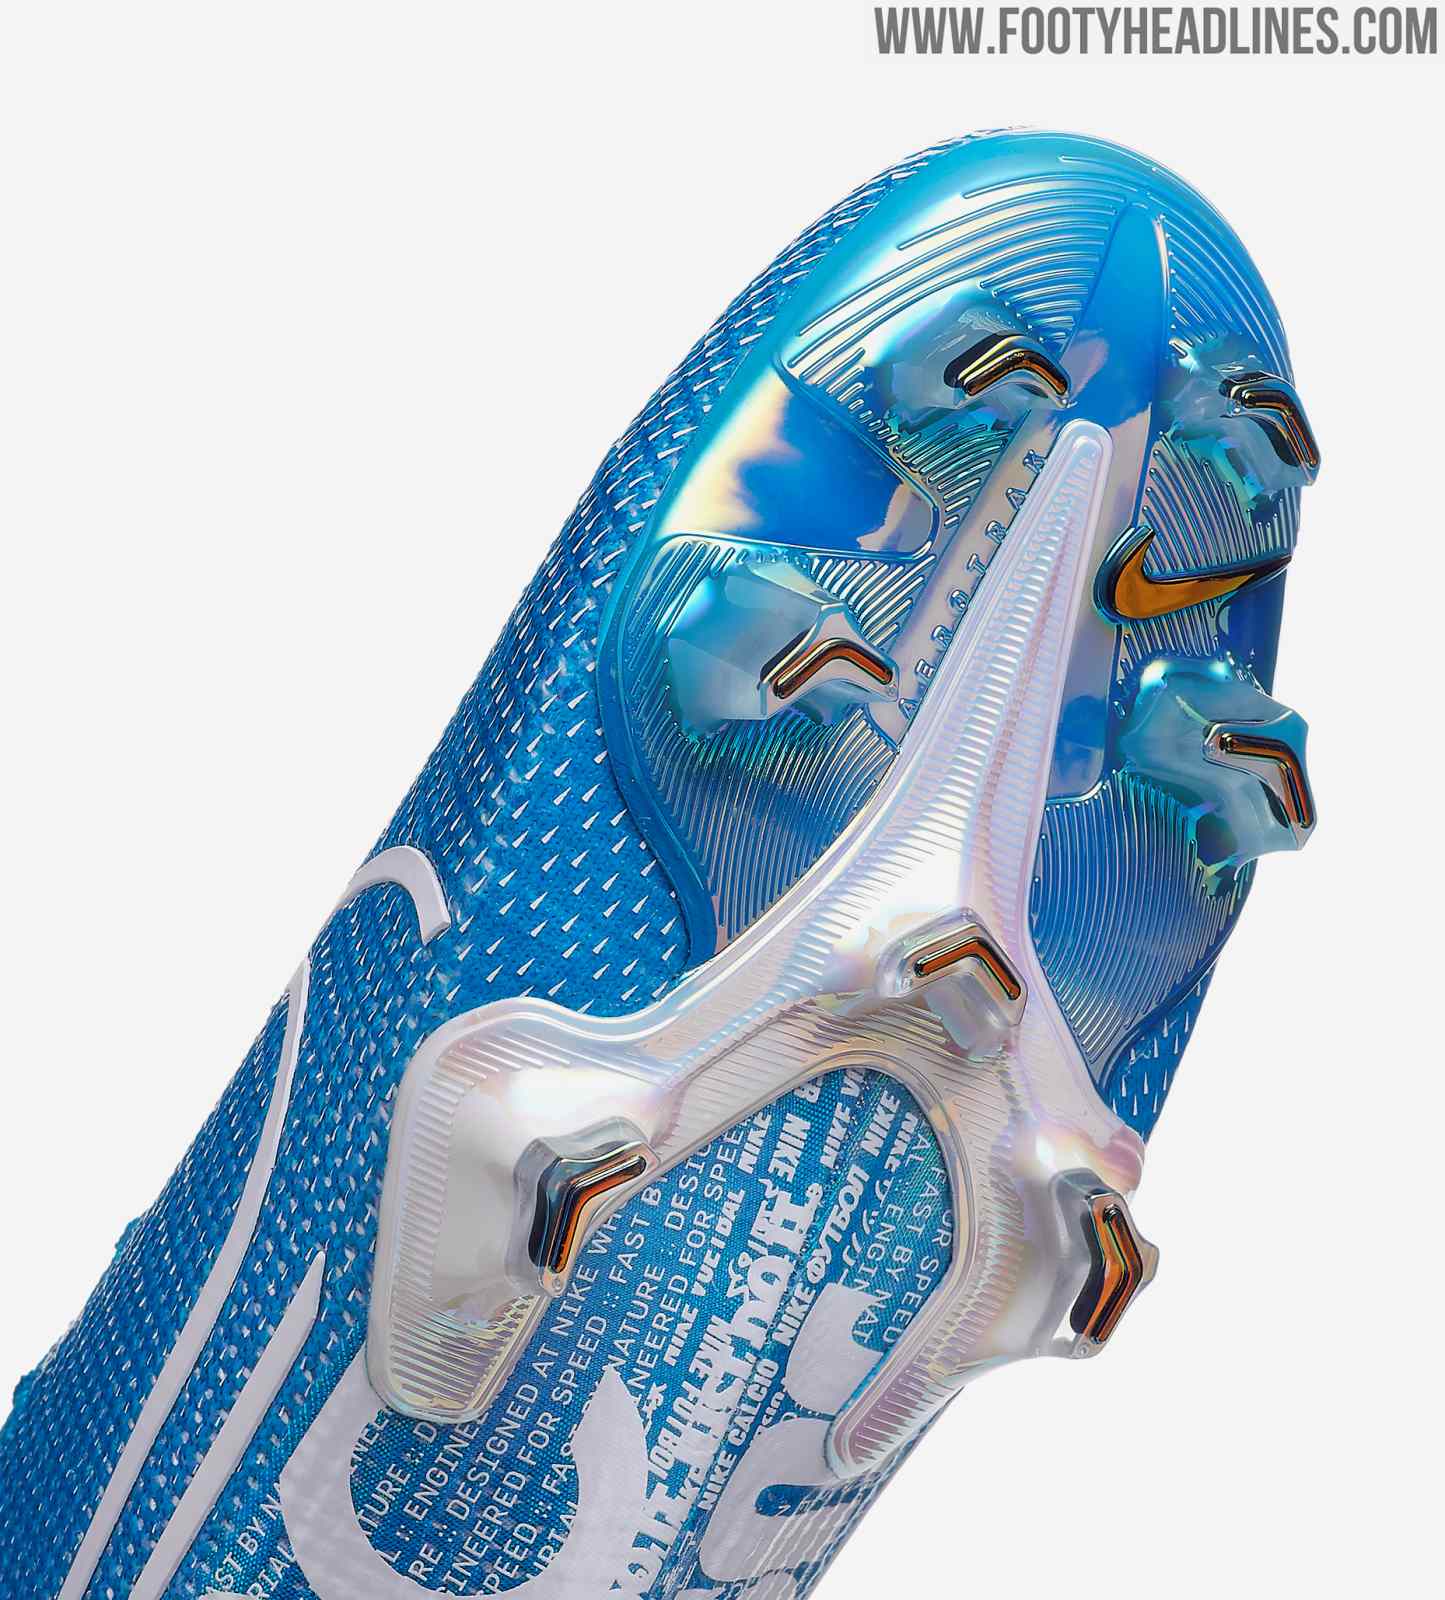 Next-Gen Nike Mercurial Vapor XIII Elite Debut Boots Revealed - Footy ...